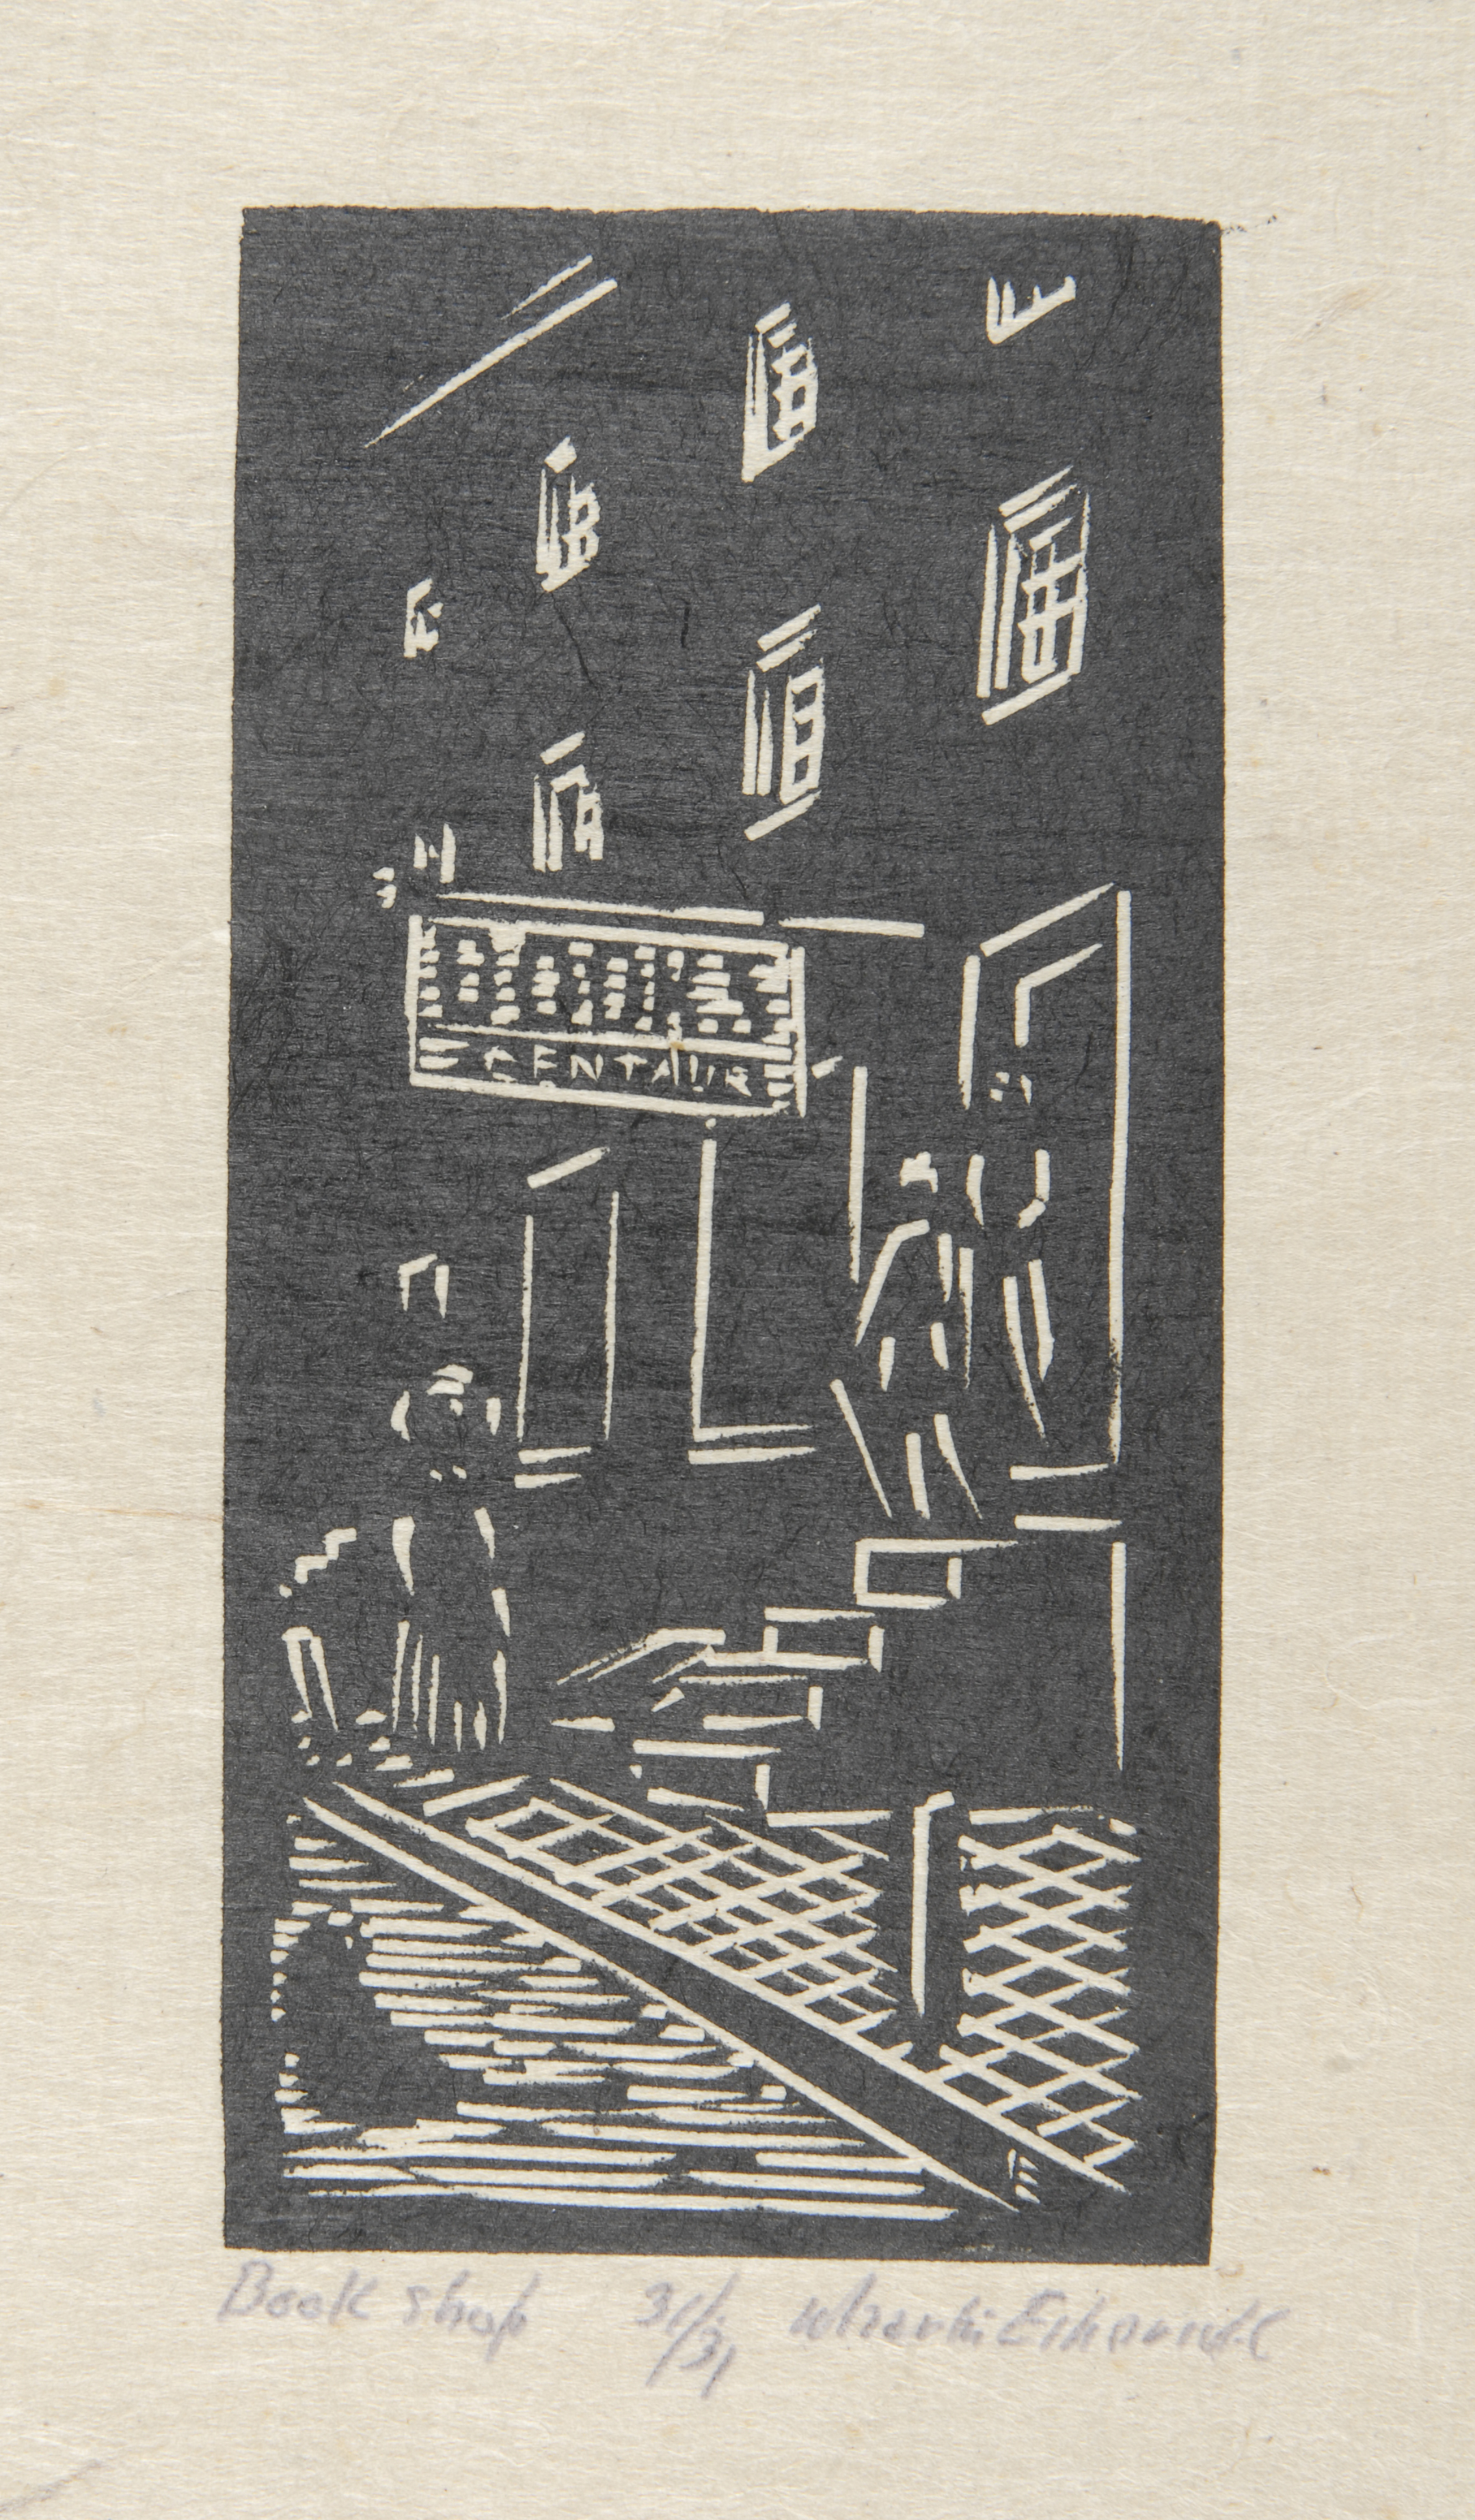 "Book Shop" woodcut print by Wharton Esherick, 1925 of the Centaur Bookshop